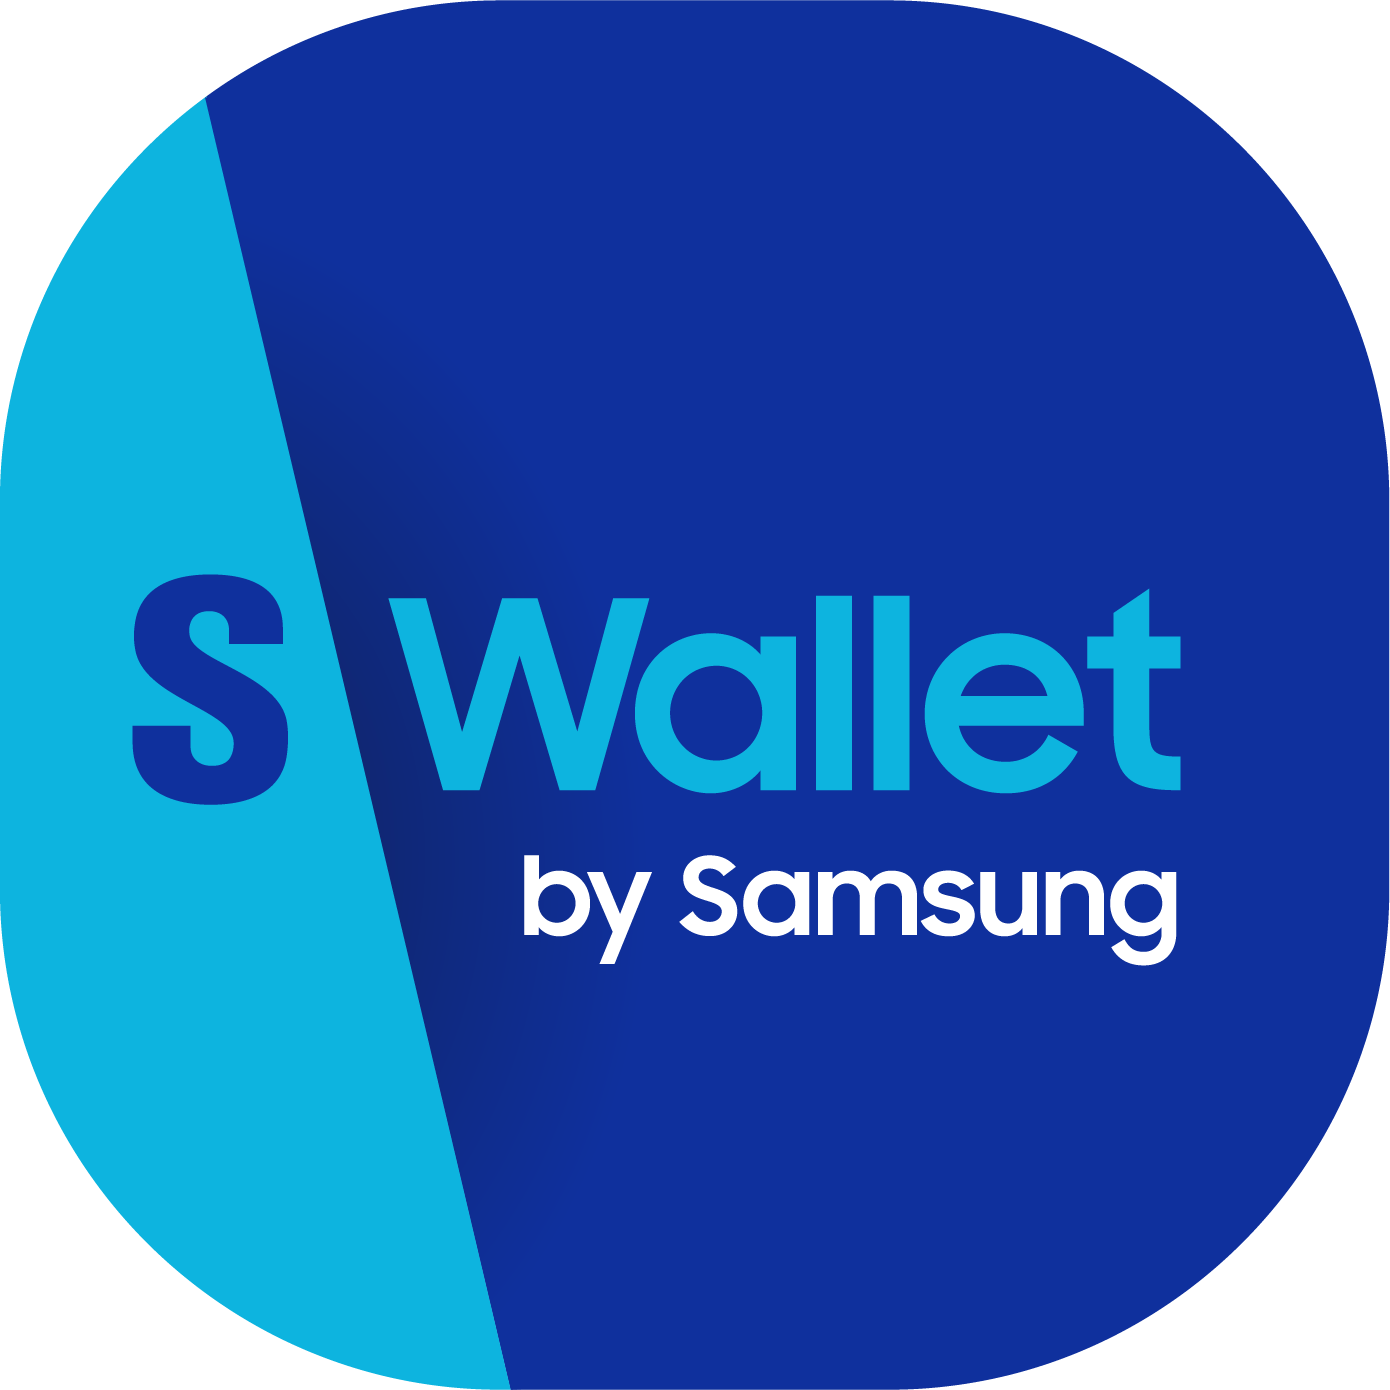 Samsung S Wallet